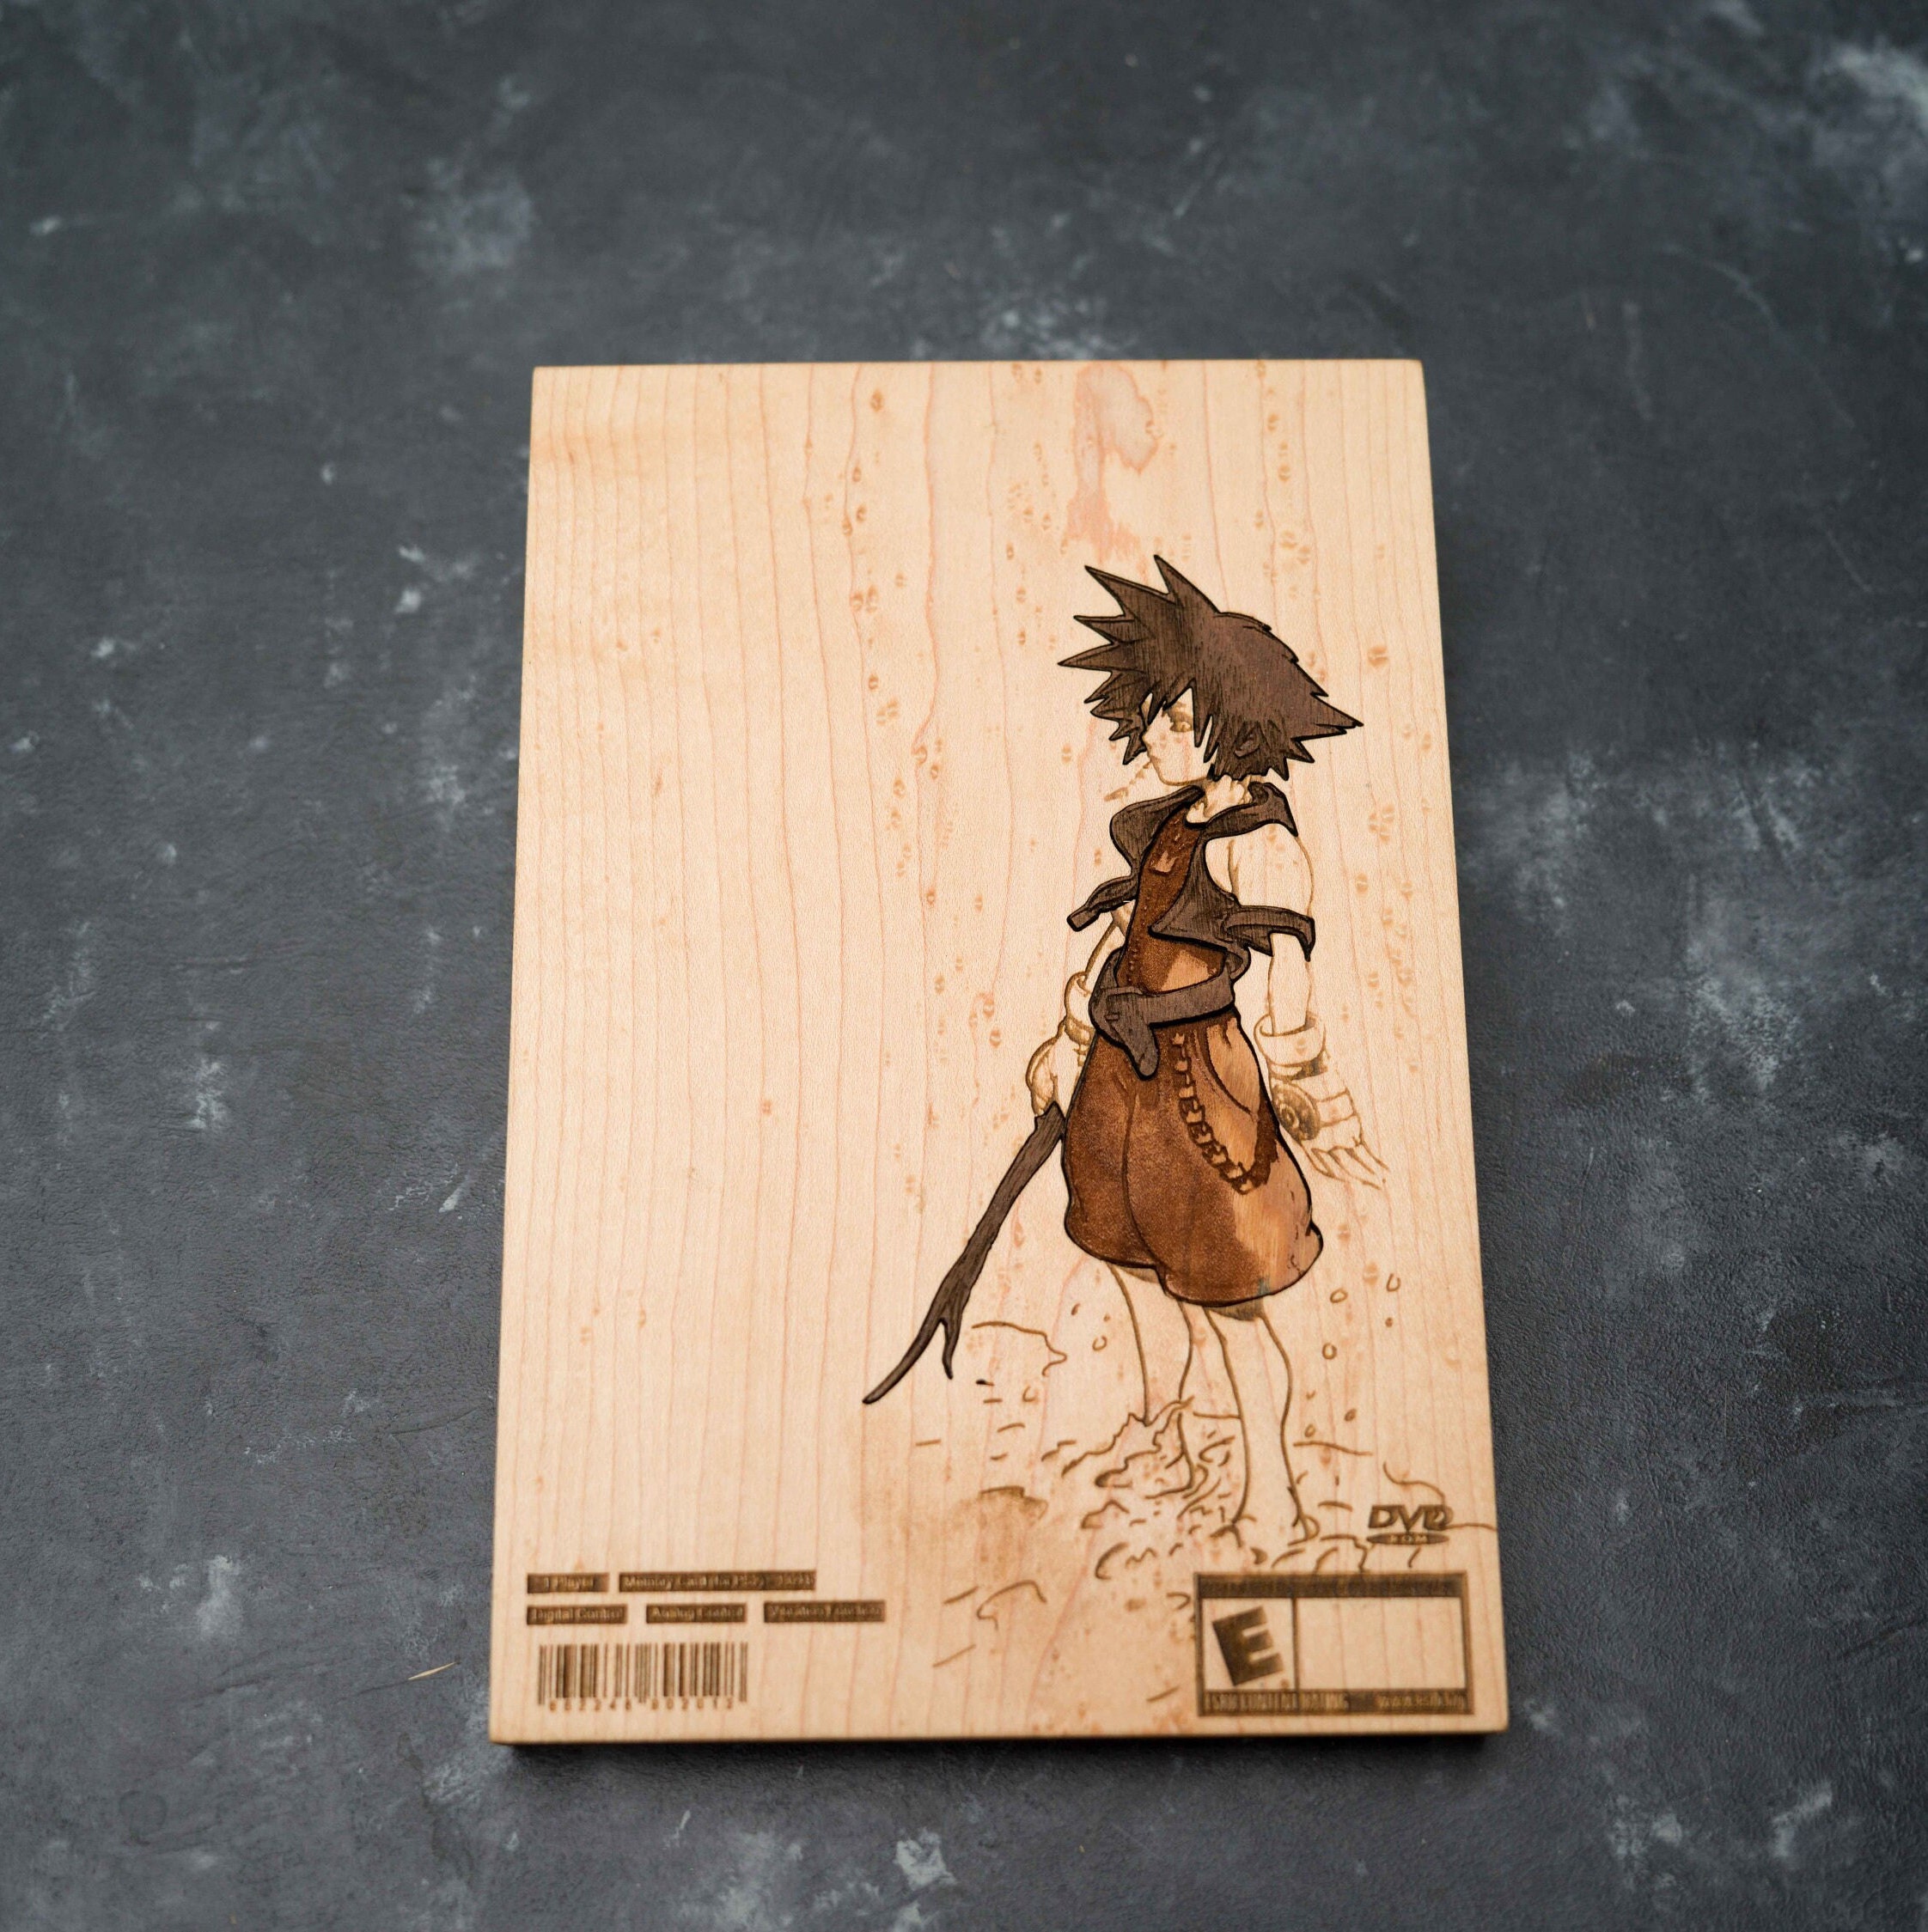 Wooden Okami Playstation 2 / PS2 Cartridge 